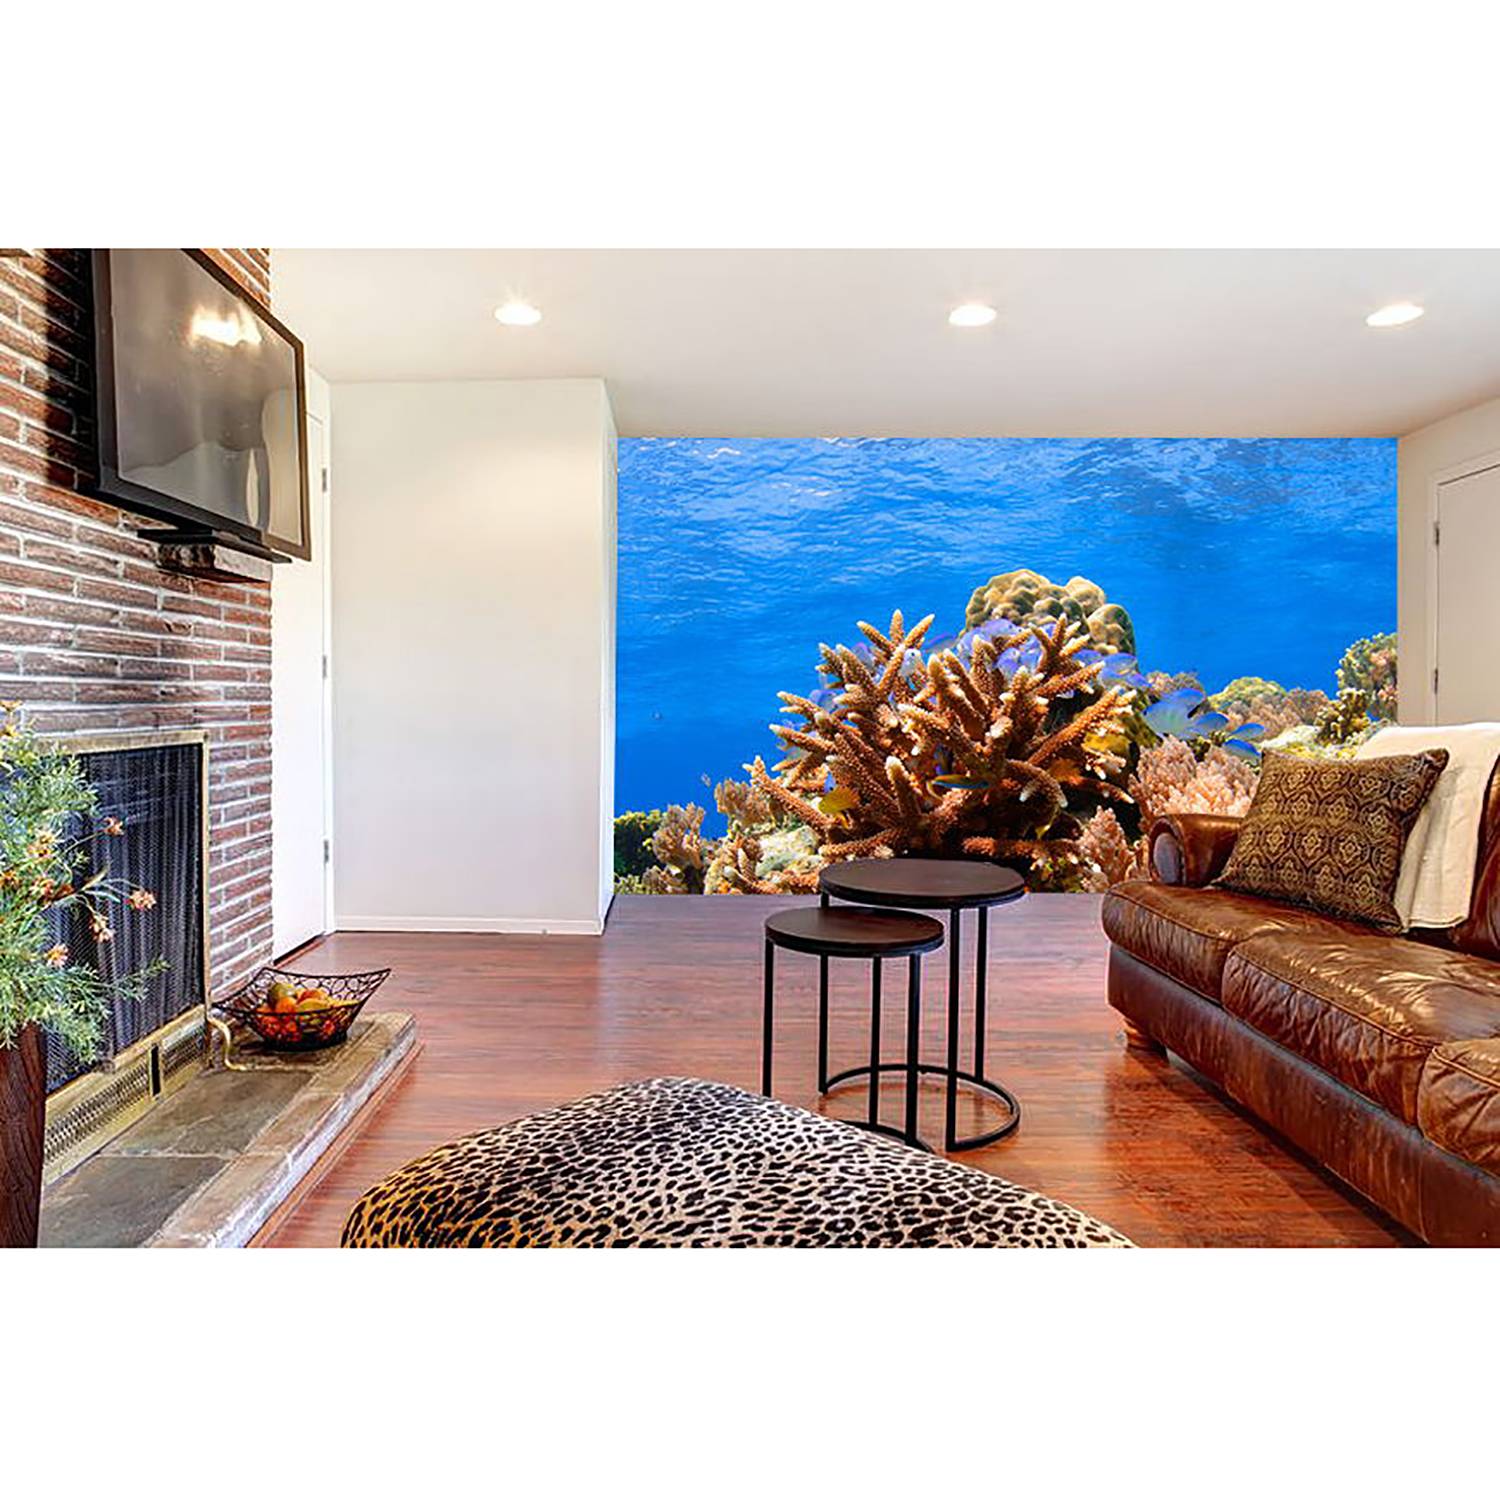 Home24 Vliesbehang Corals Reef, WandbilderXXL